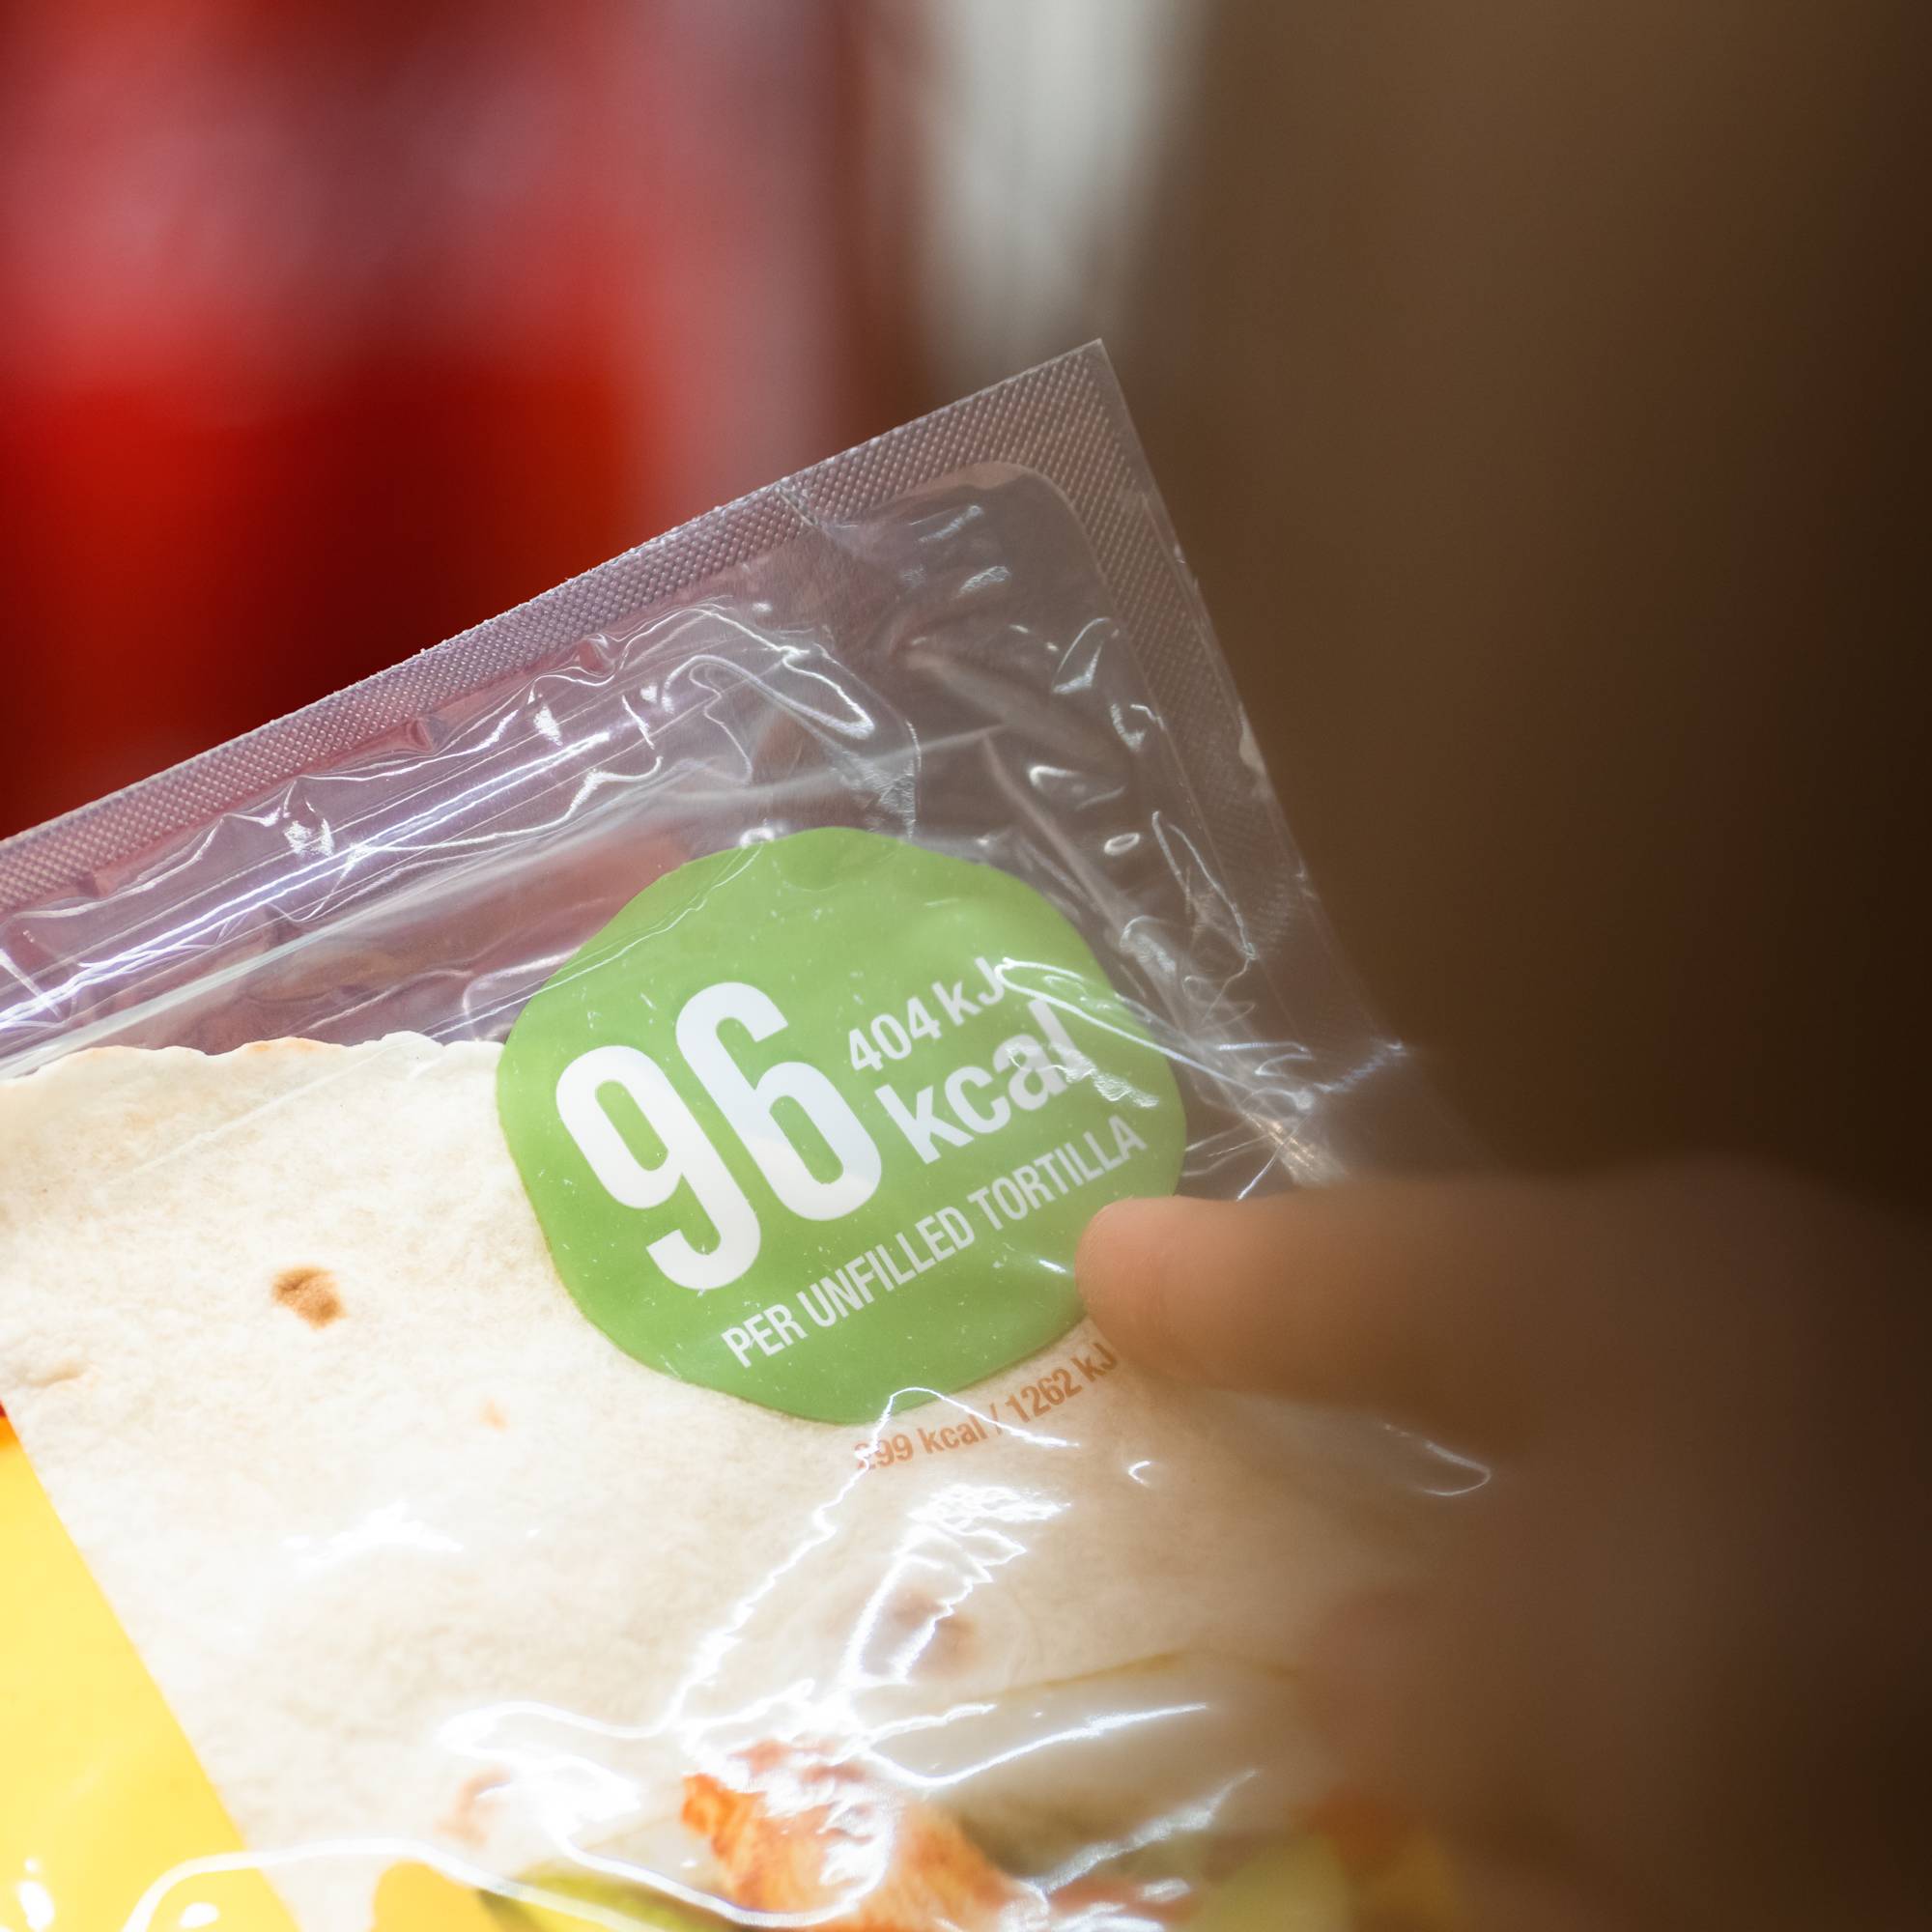 Et nærbilde av en pakke med tortillalefser. På den står det tydelig markert: «96 kcal per unfilled tortilla».